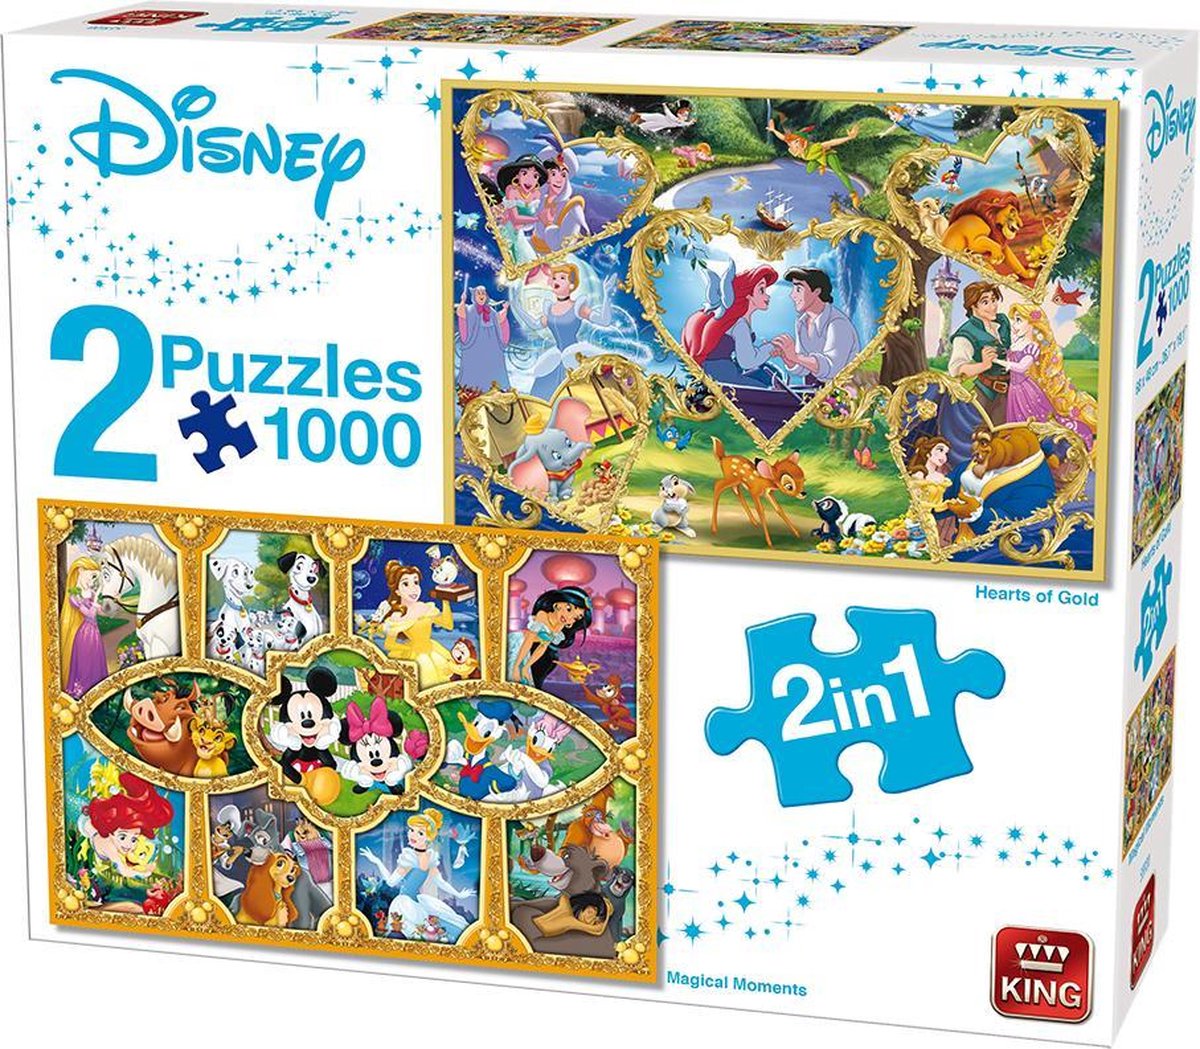 Disney Puzzel 2 x 1000 Stukjes - Hearts of Gold  & Magical Moments - King